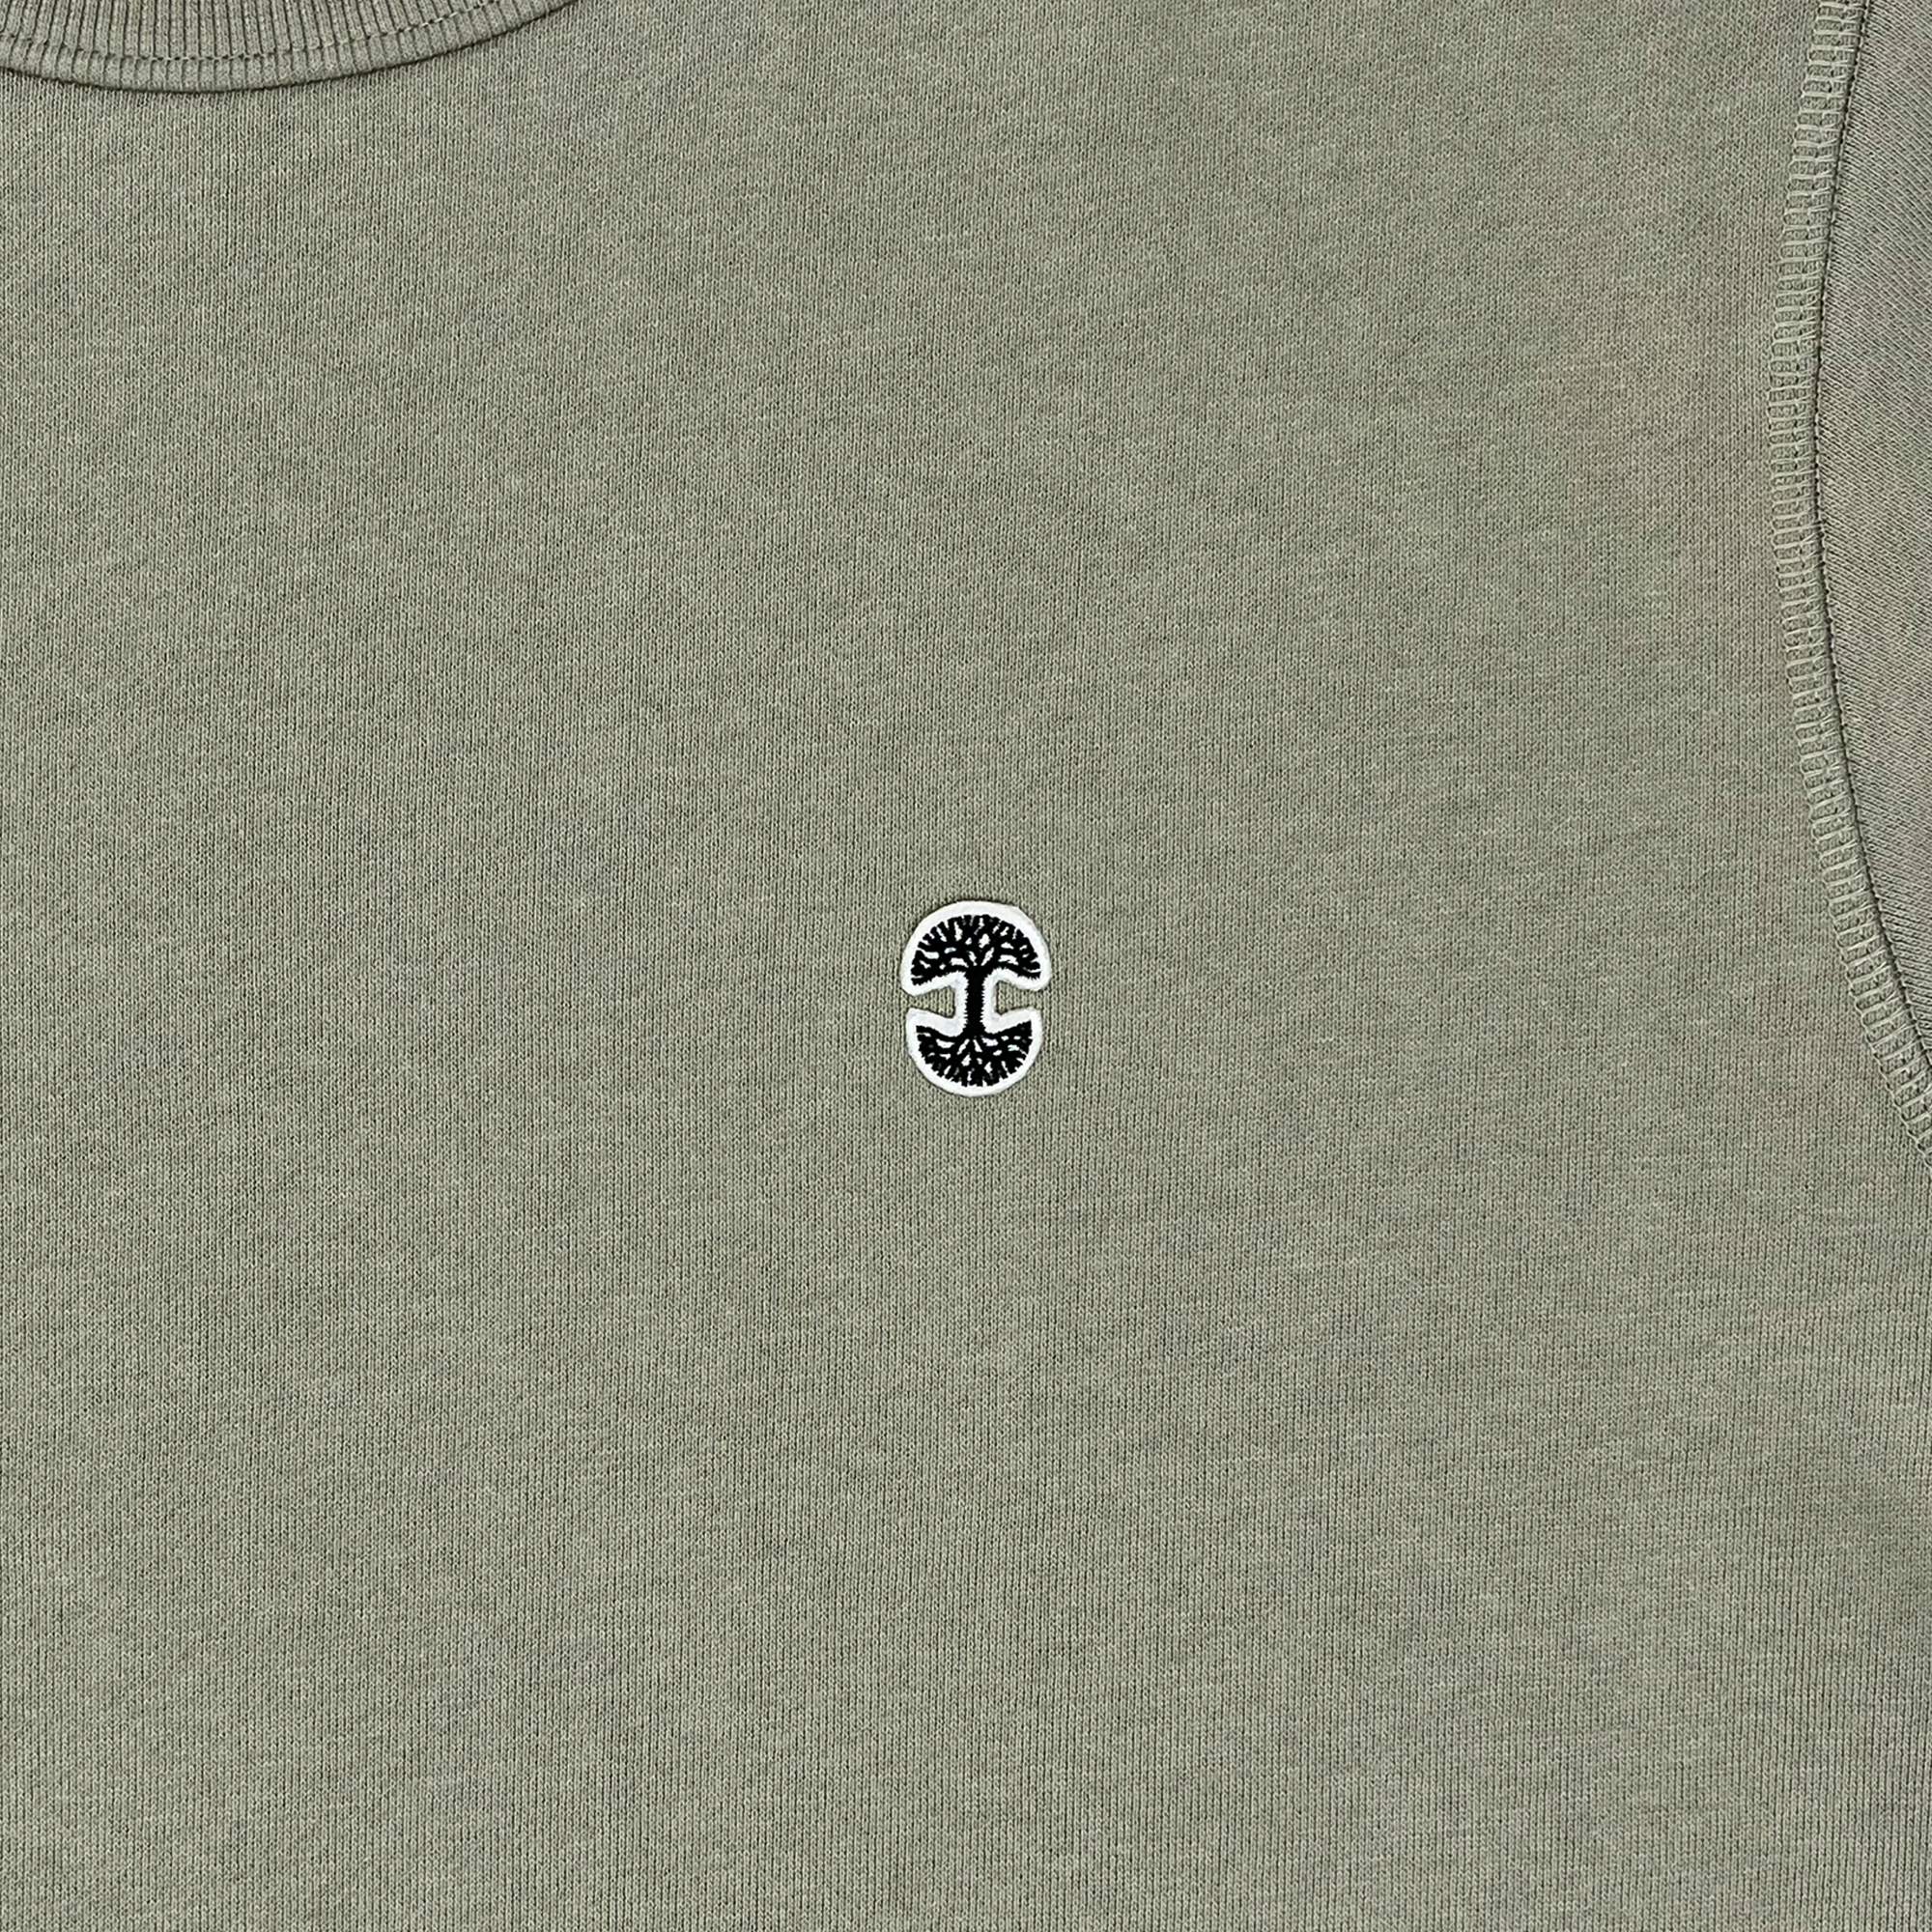 Detailed front view of Premium crewneck sweatshirt - Oaklandish tree logo, Eucalyptus